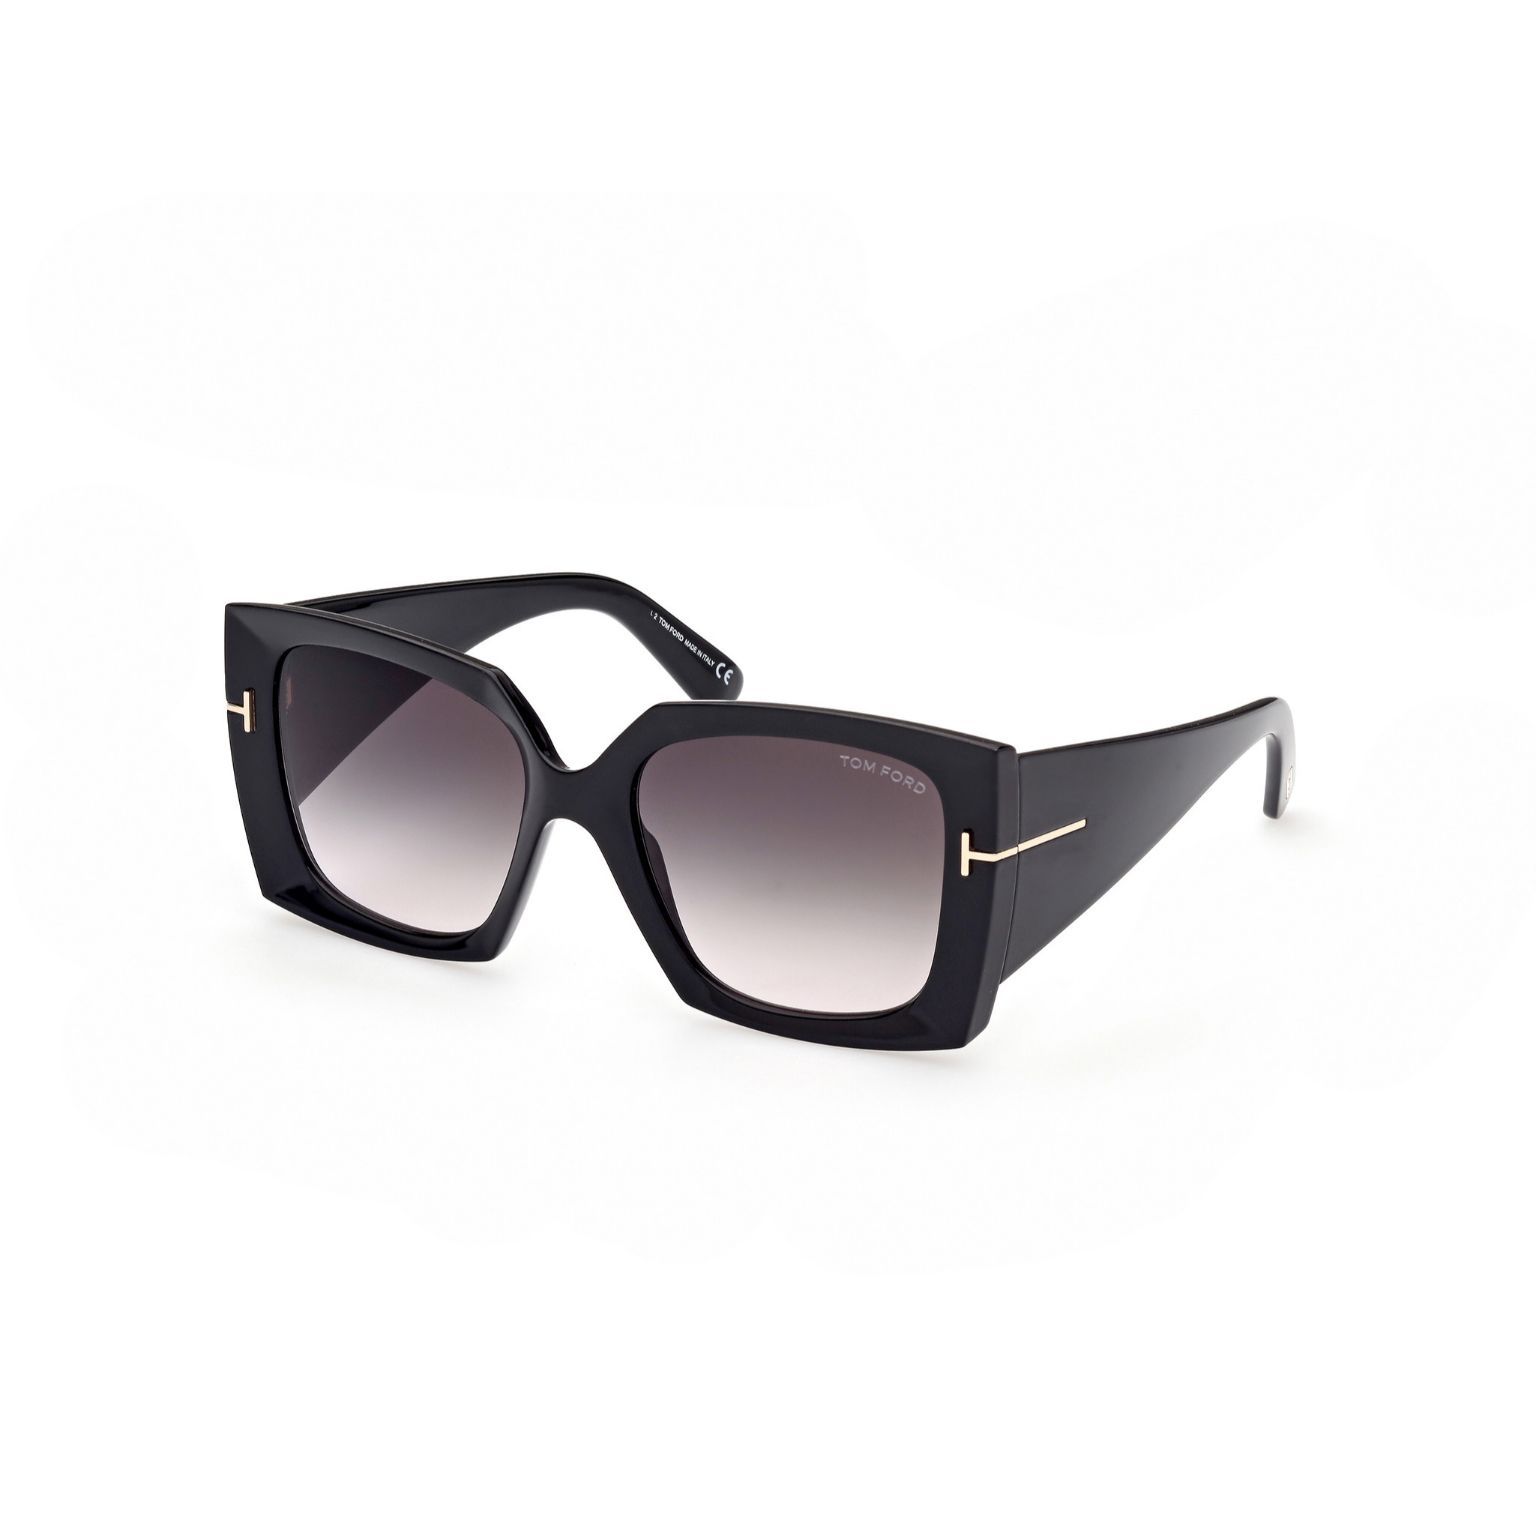 FT0921 Square Sunglasses 01B - size 54